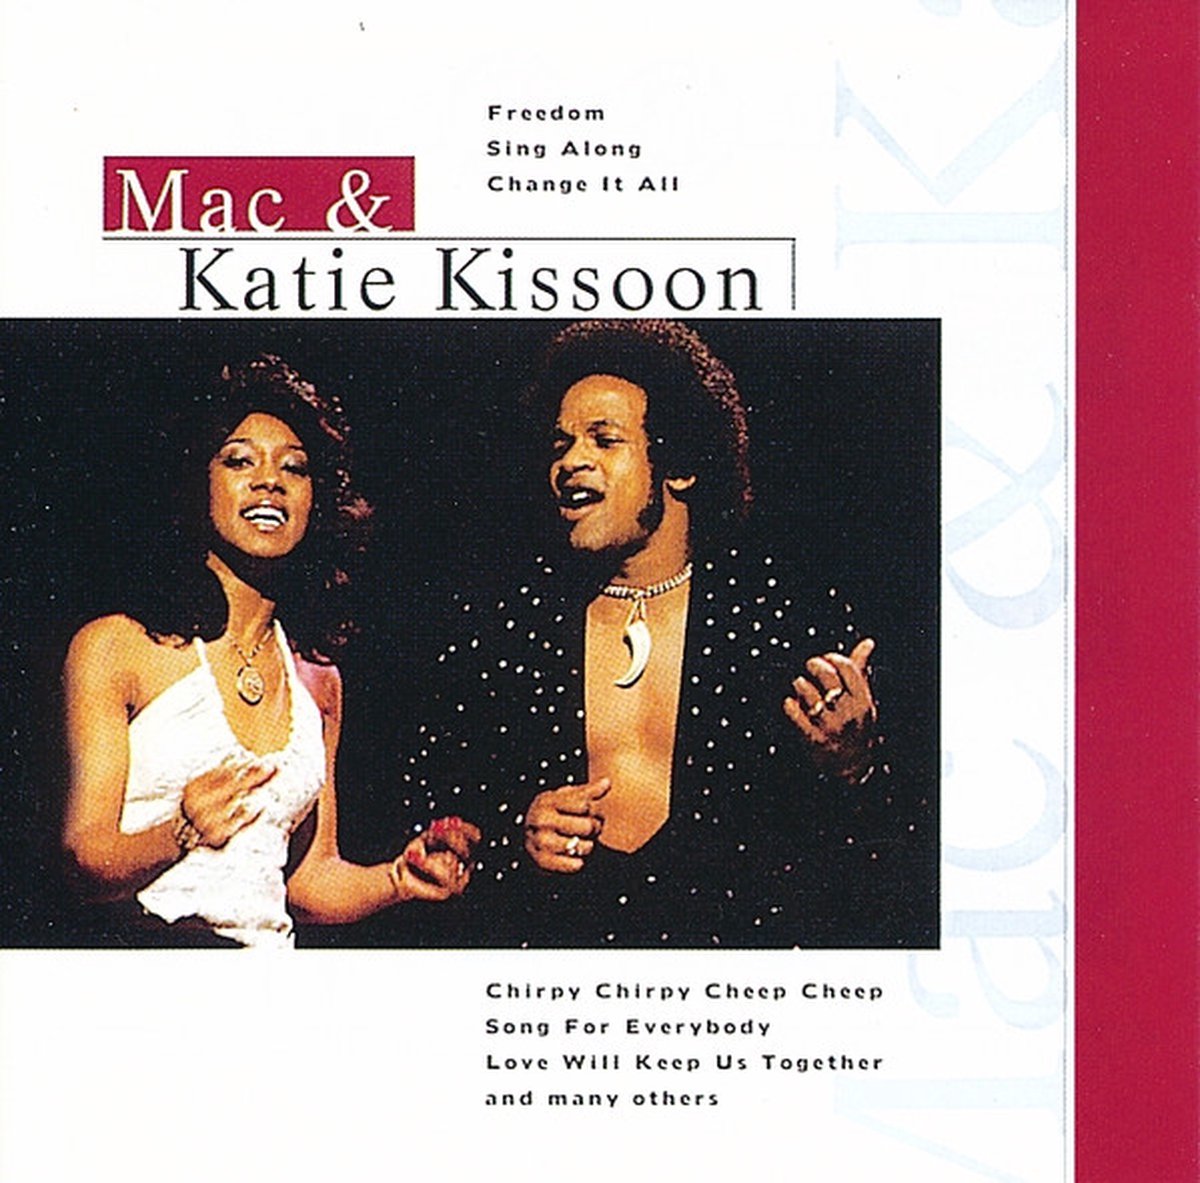 Mac & Katie Kissoon - Mac & Katie Kissoon (remind) - MAC & KATIE KISSOON